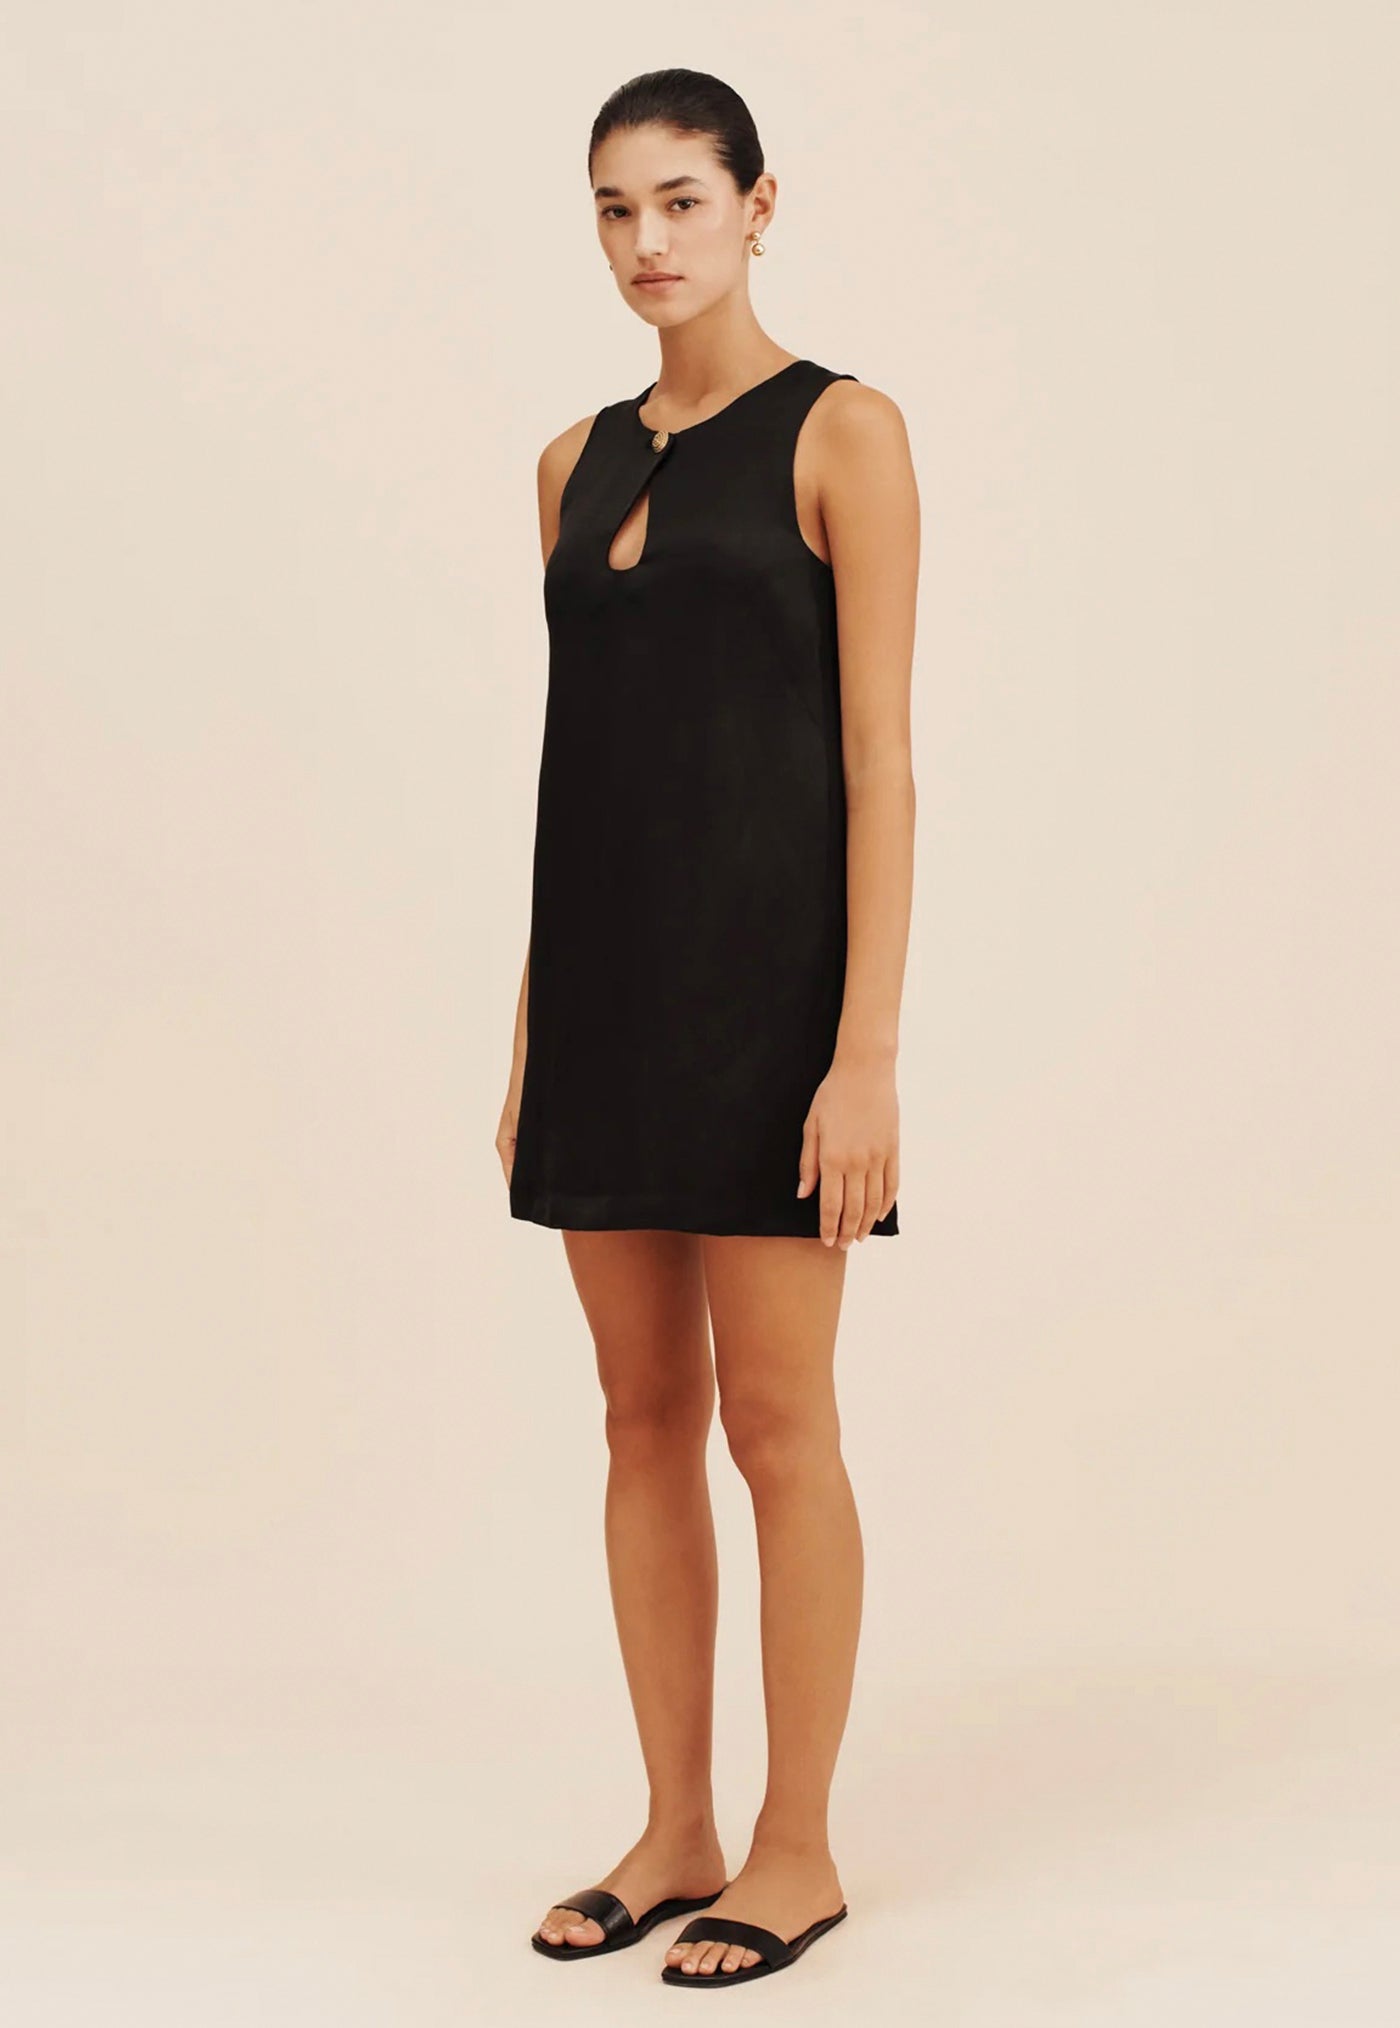 Gigi Mini Dress - Black sold by Angel Divine